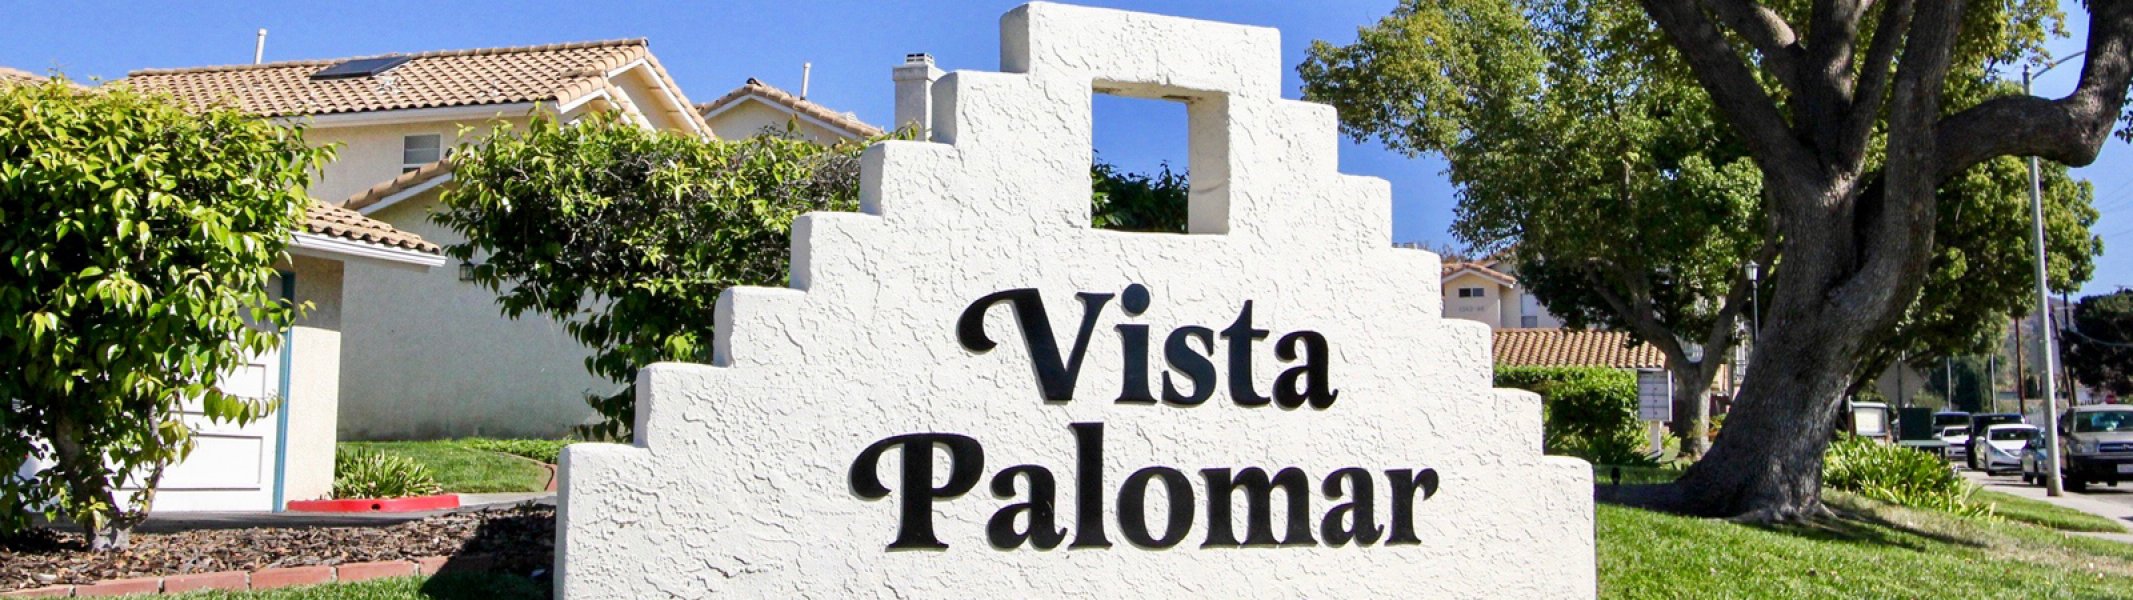 Vista Palomar